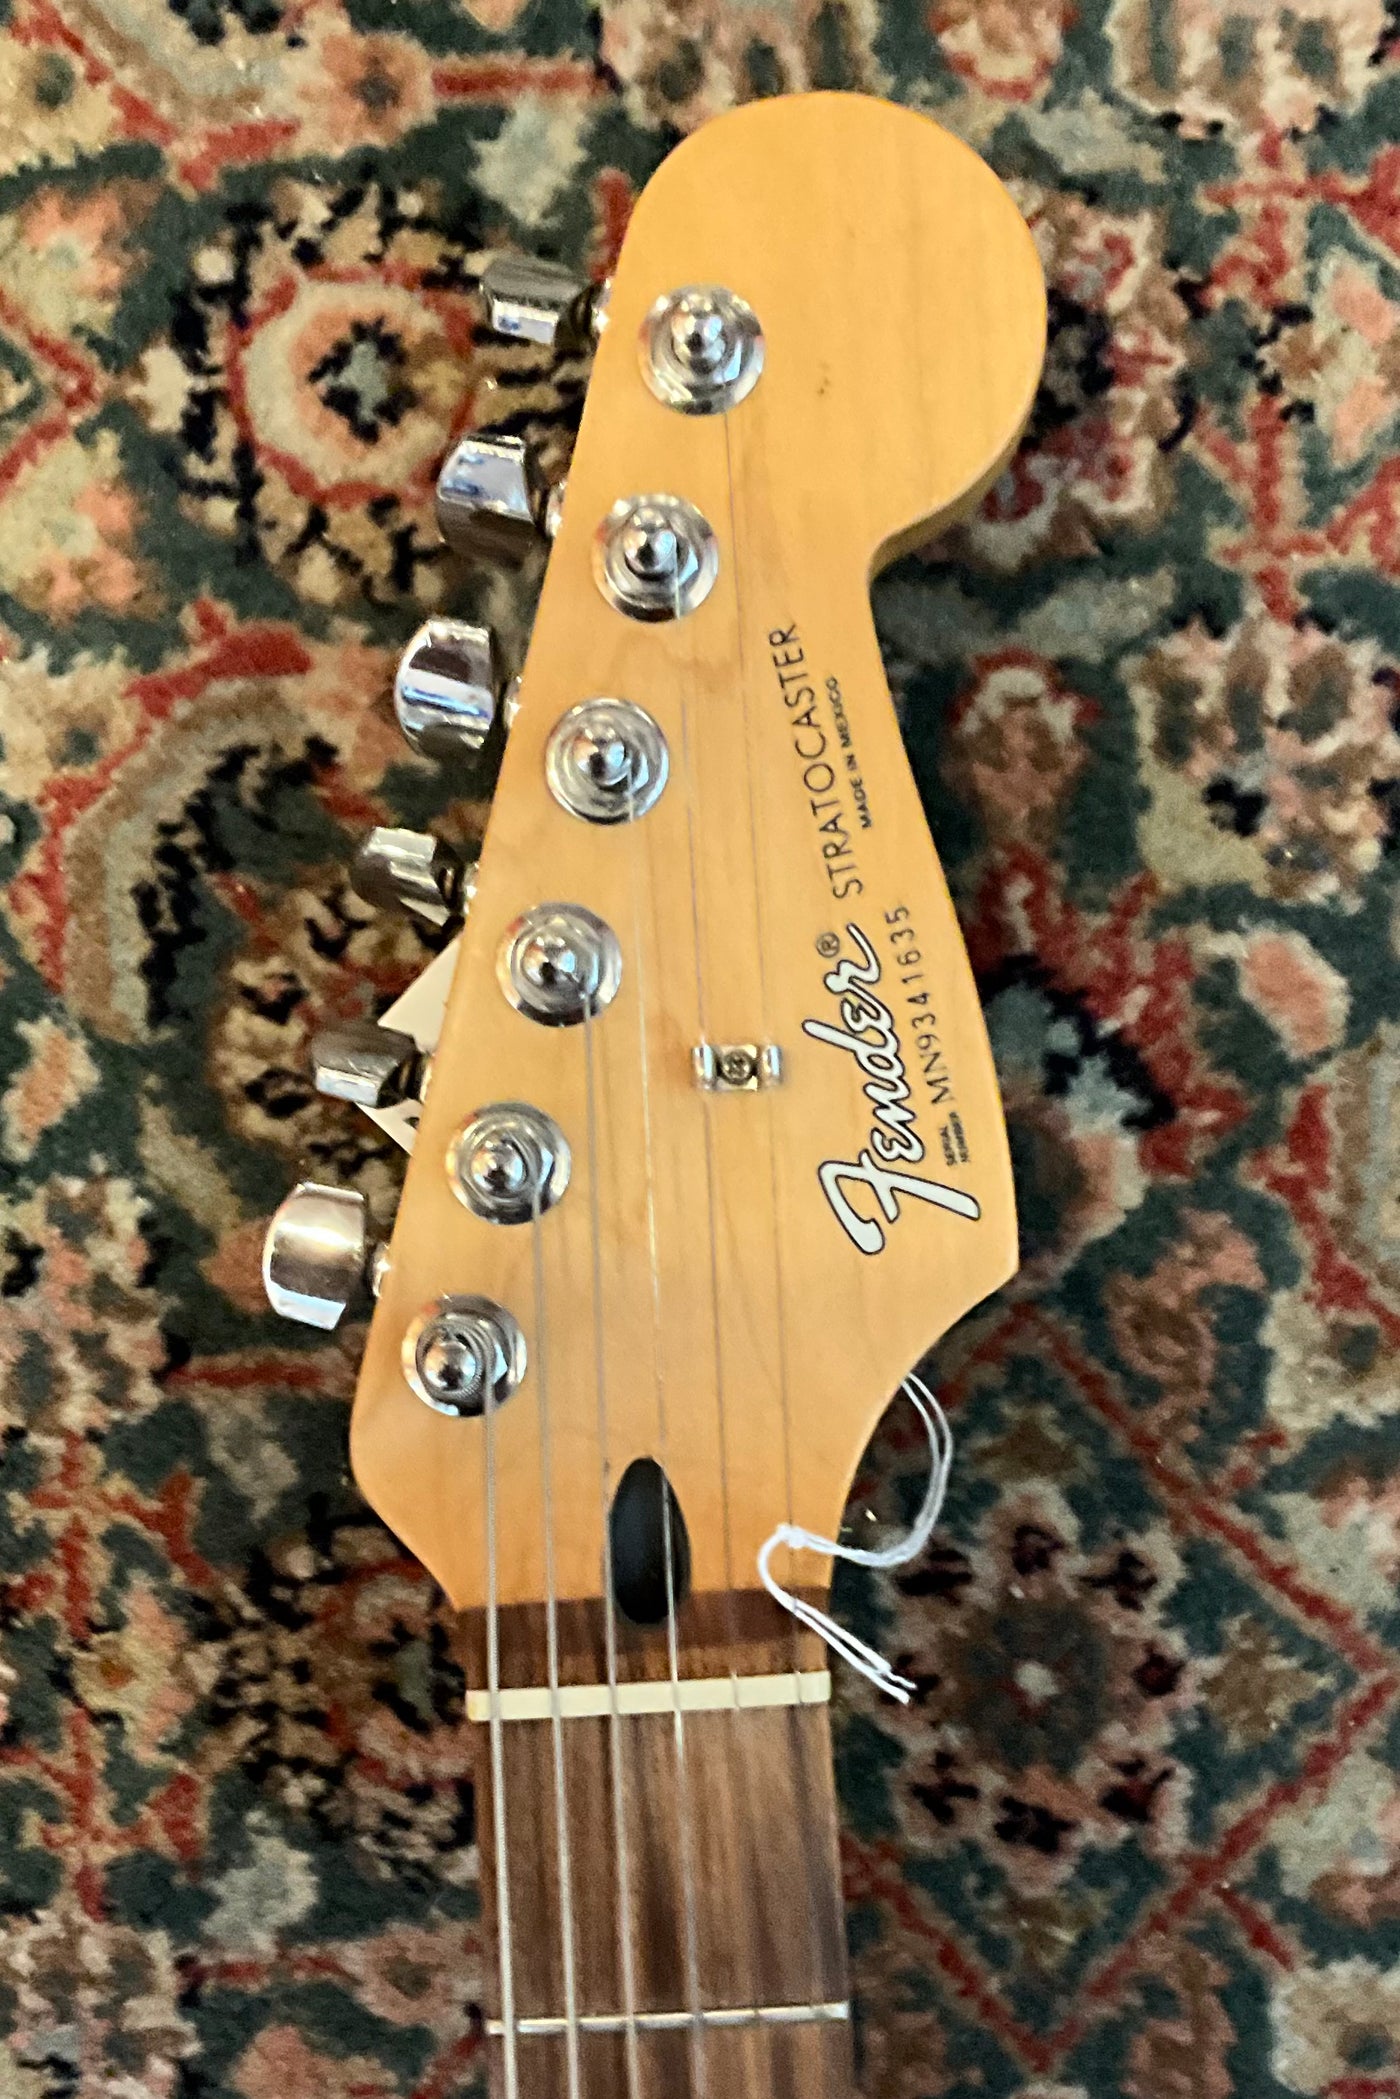 Fender Stratocaster w/ Roland GR30 synthesizer